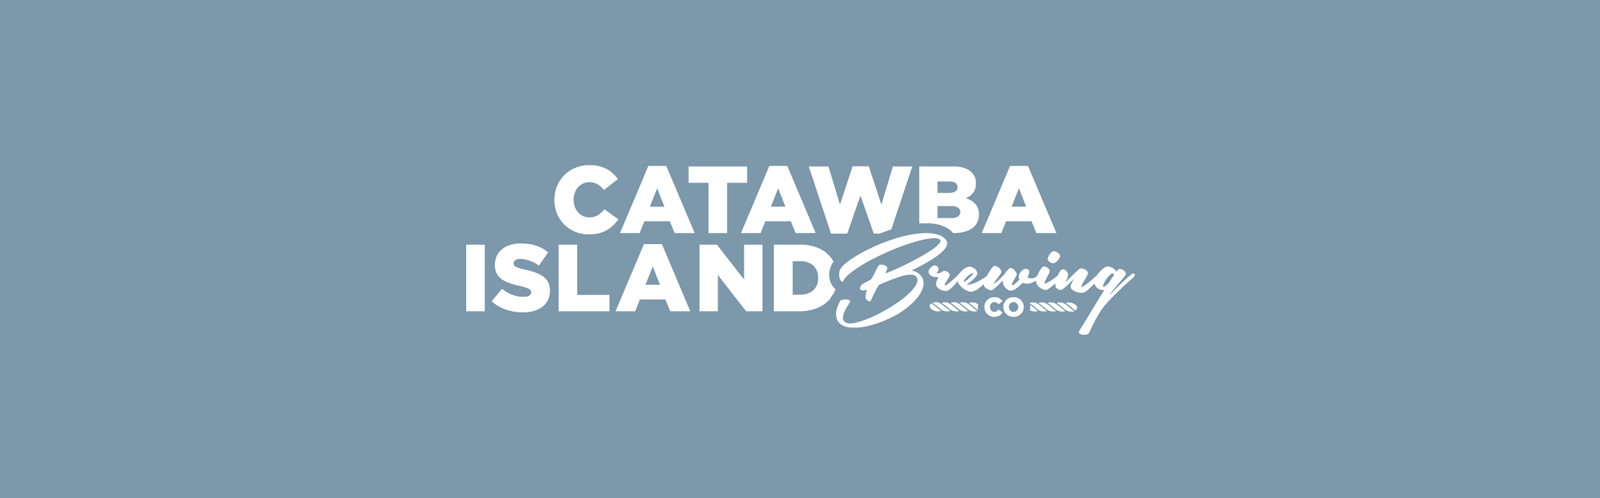 catawba-island-brewing-co-name.png